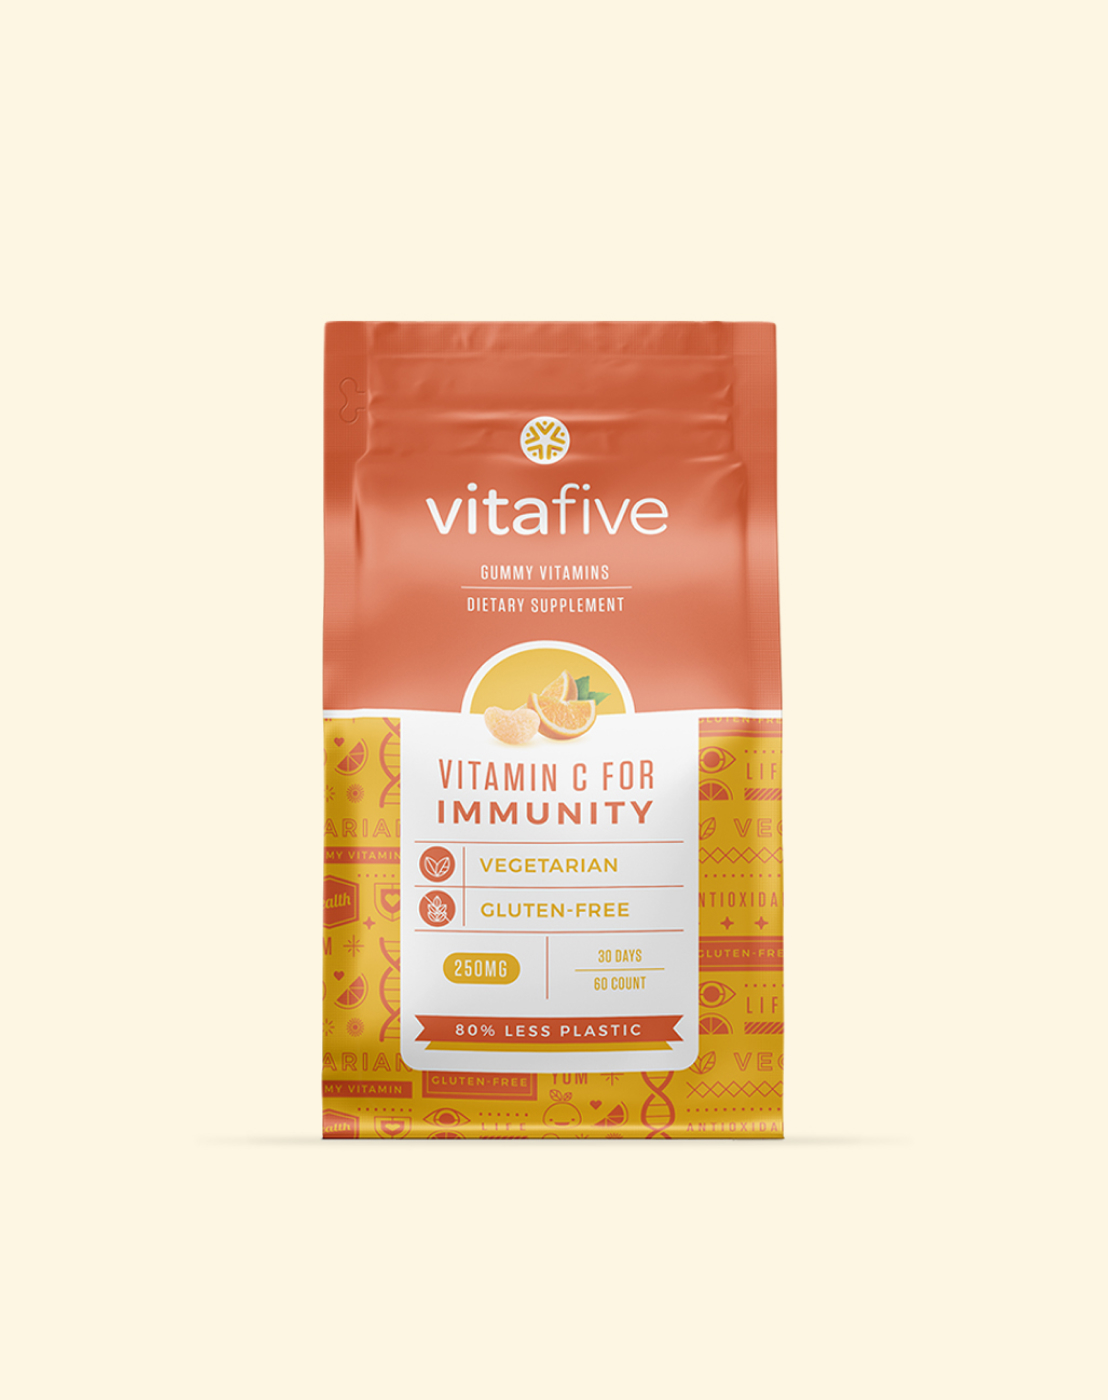 Vitafive-IMG-1-1